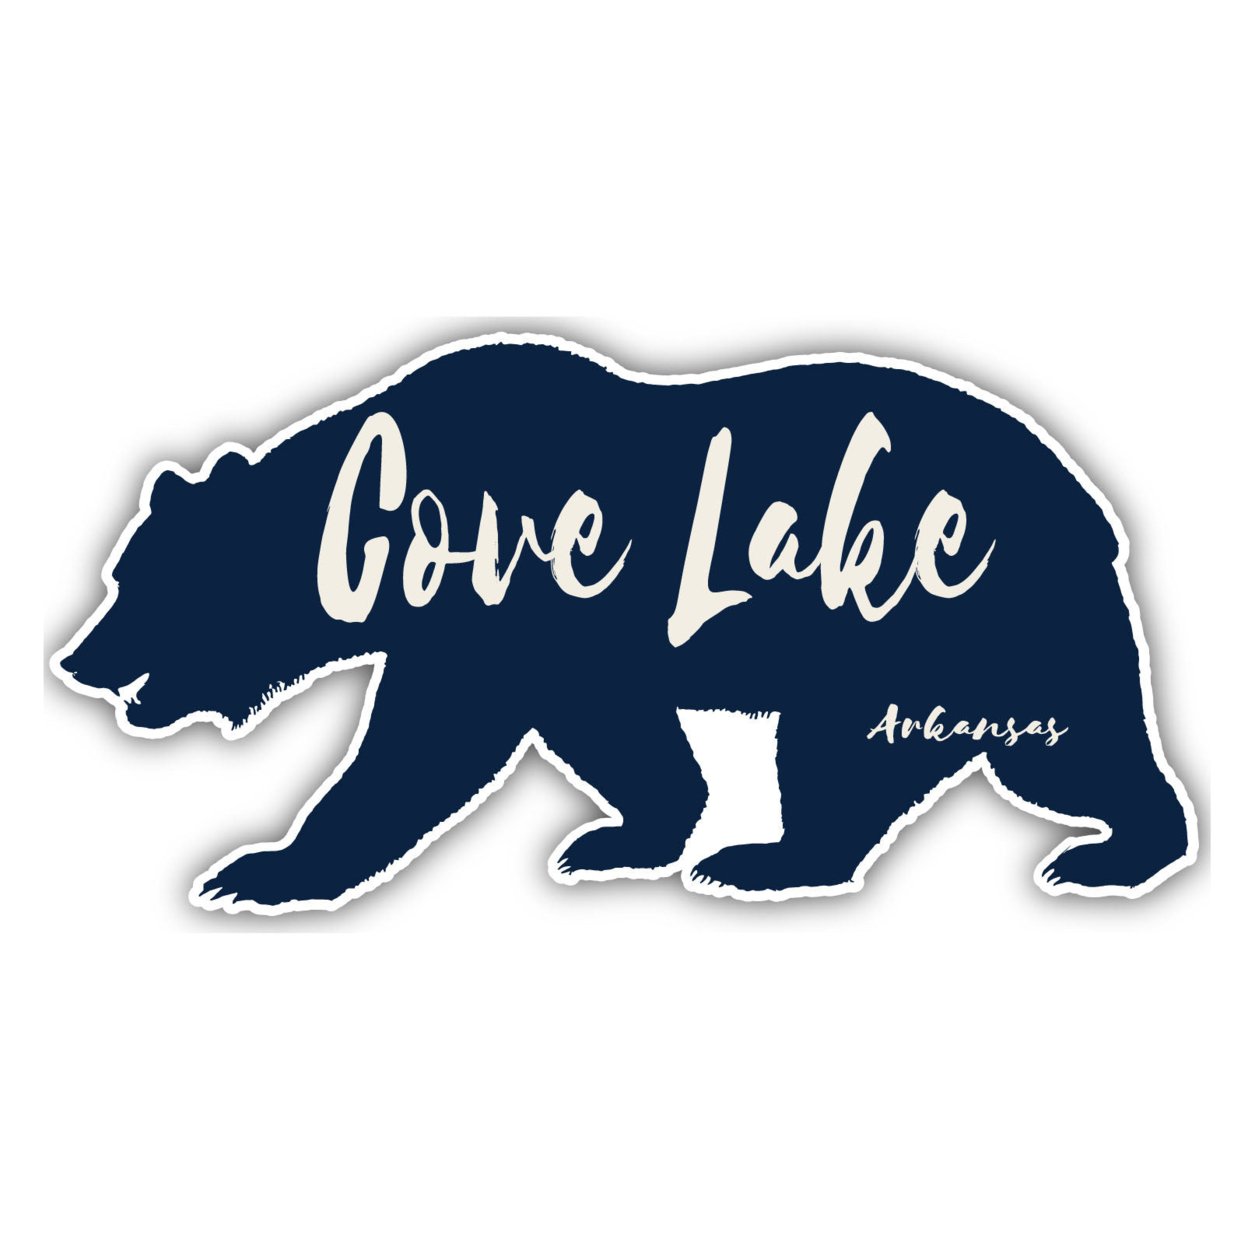 Cove Lake Arkansas Souvenir Decorative Stickers (Choose Theme And Size) - 4-Pack, 4-Inch, Bear